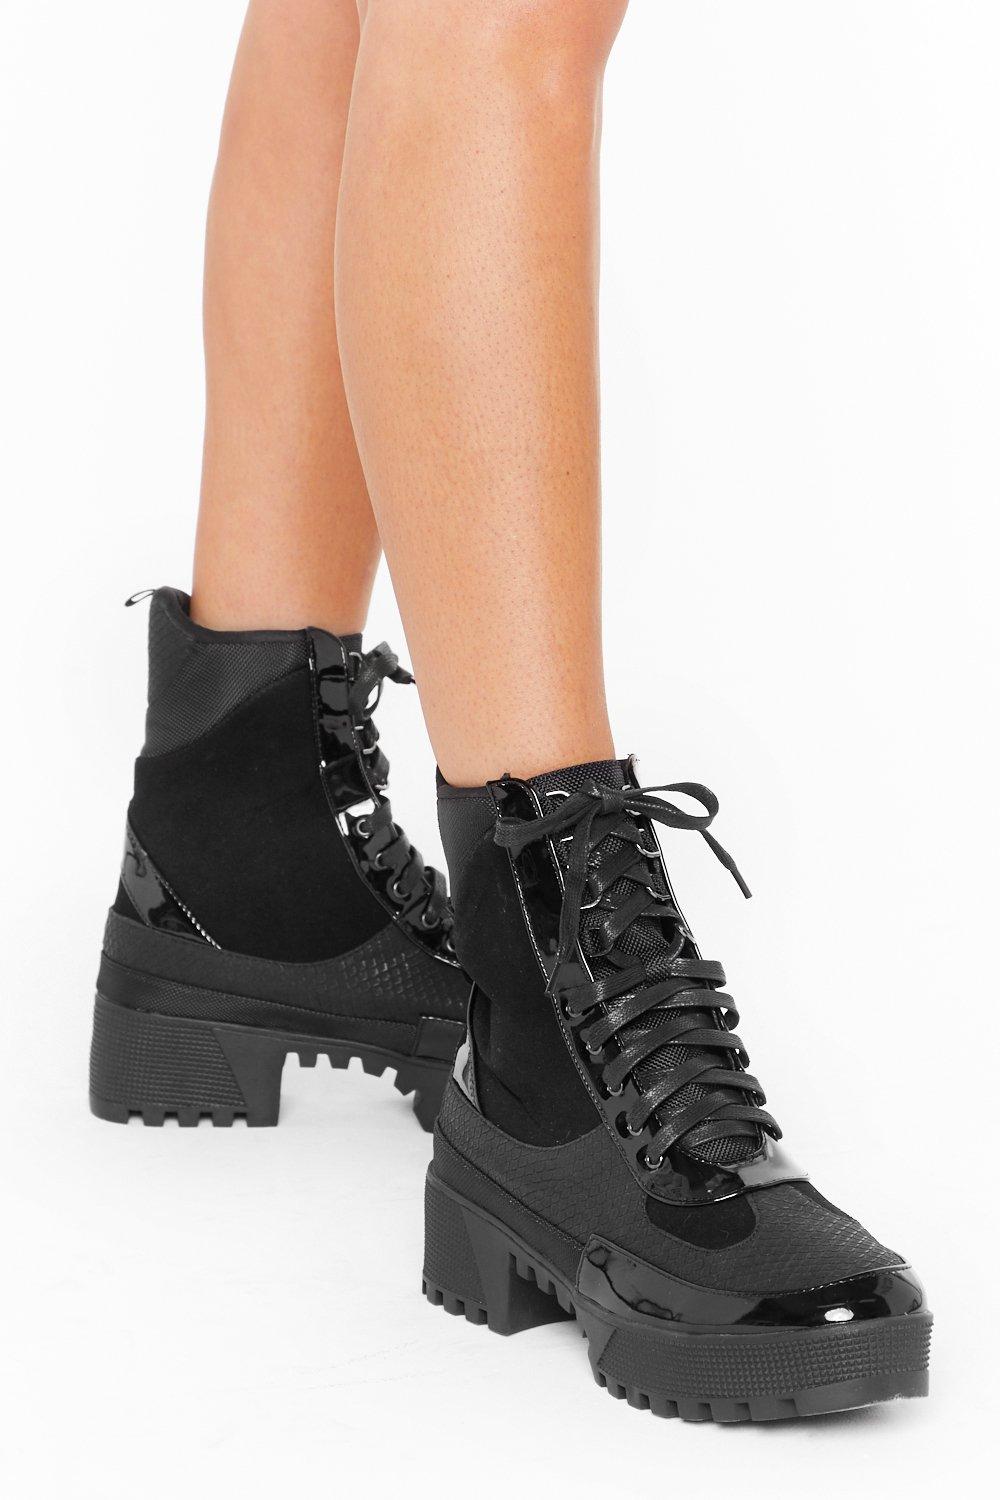 chunky black hiker boots